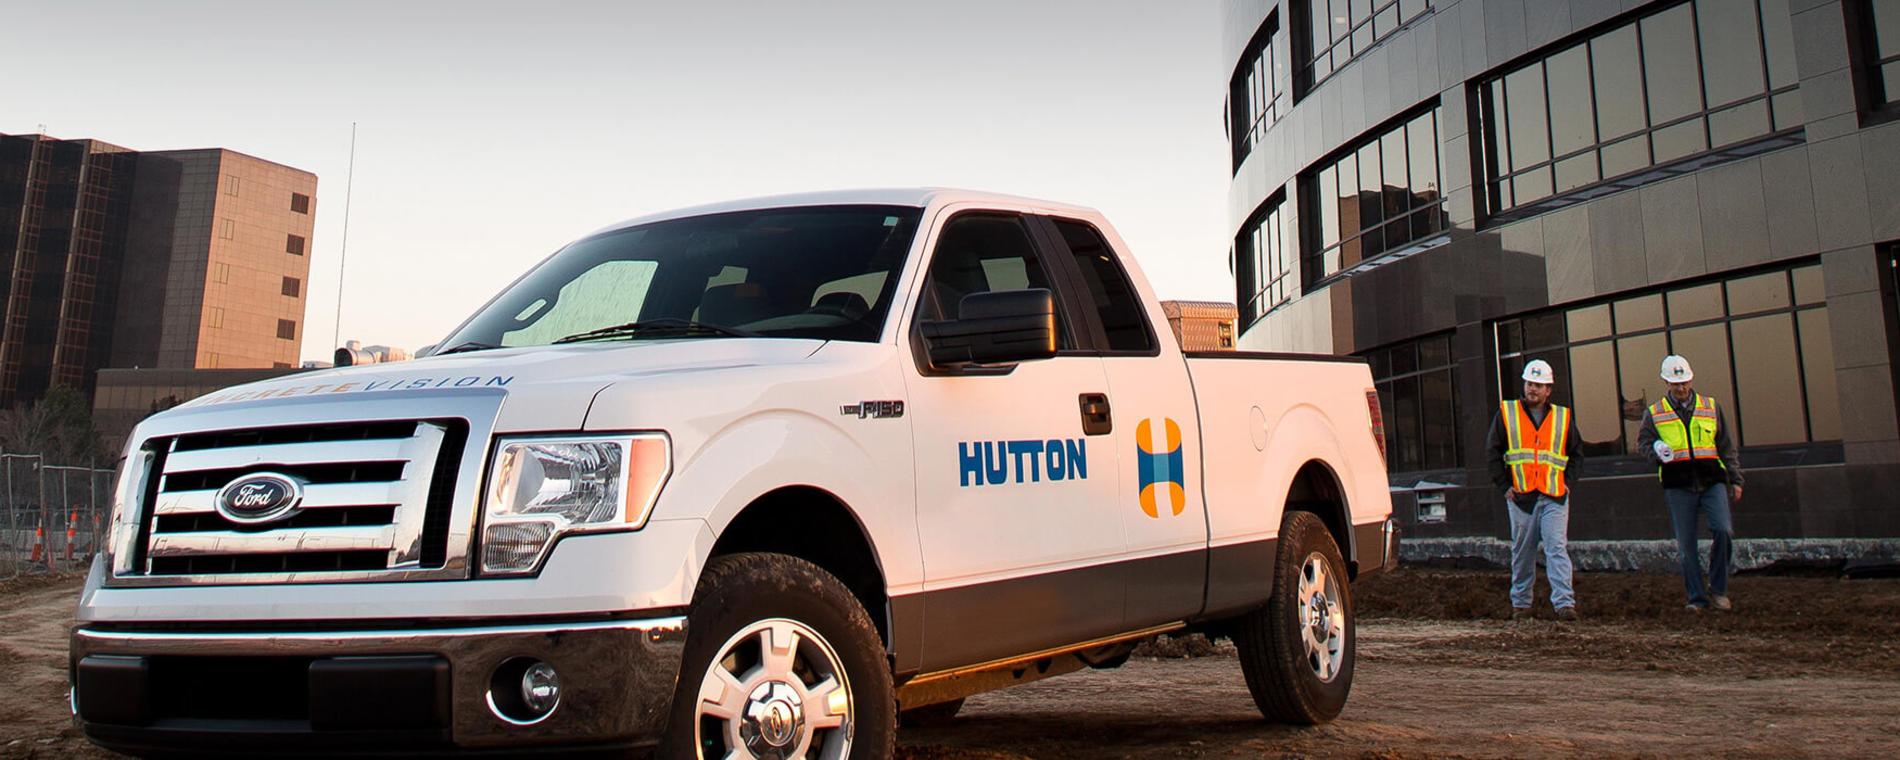 Hutton job site Visit Wichita